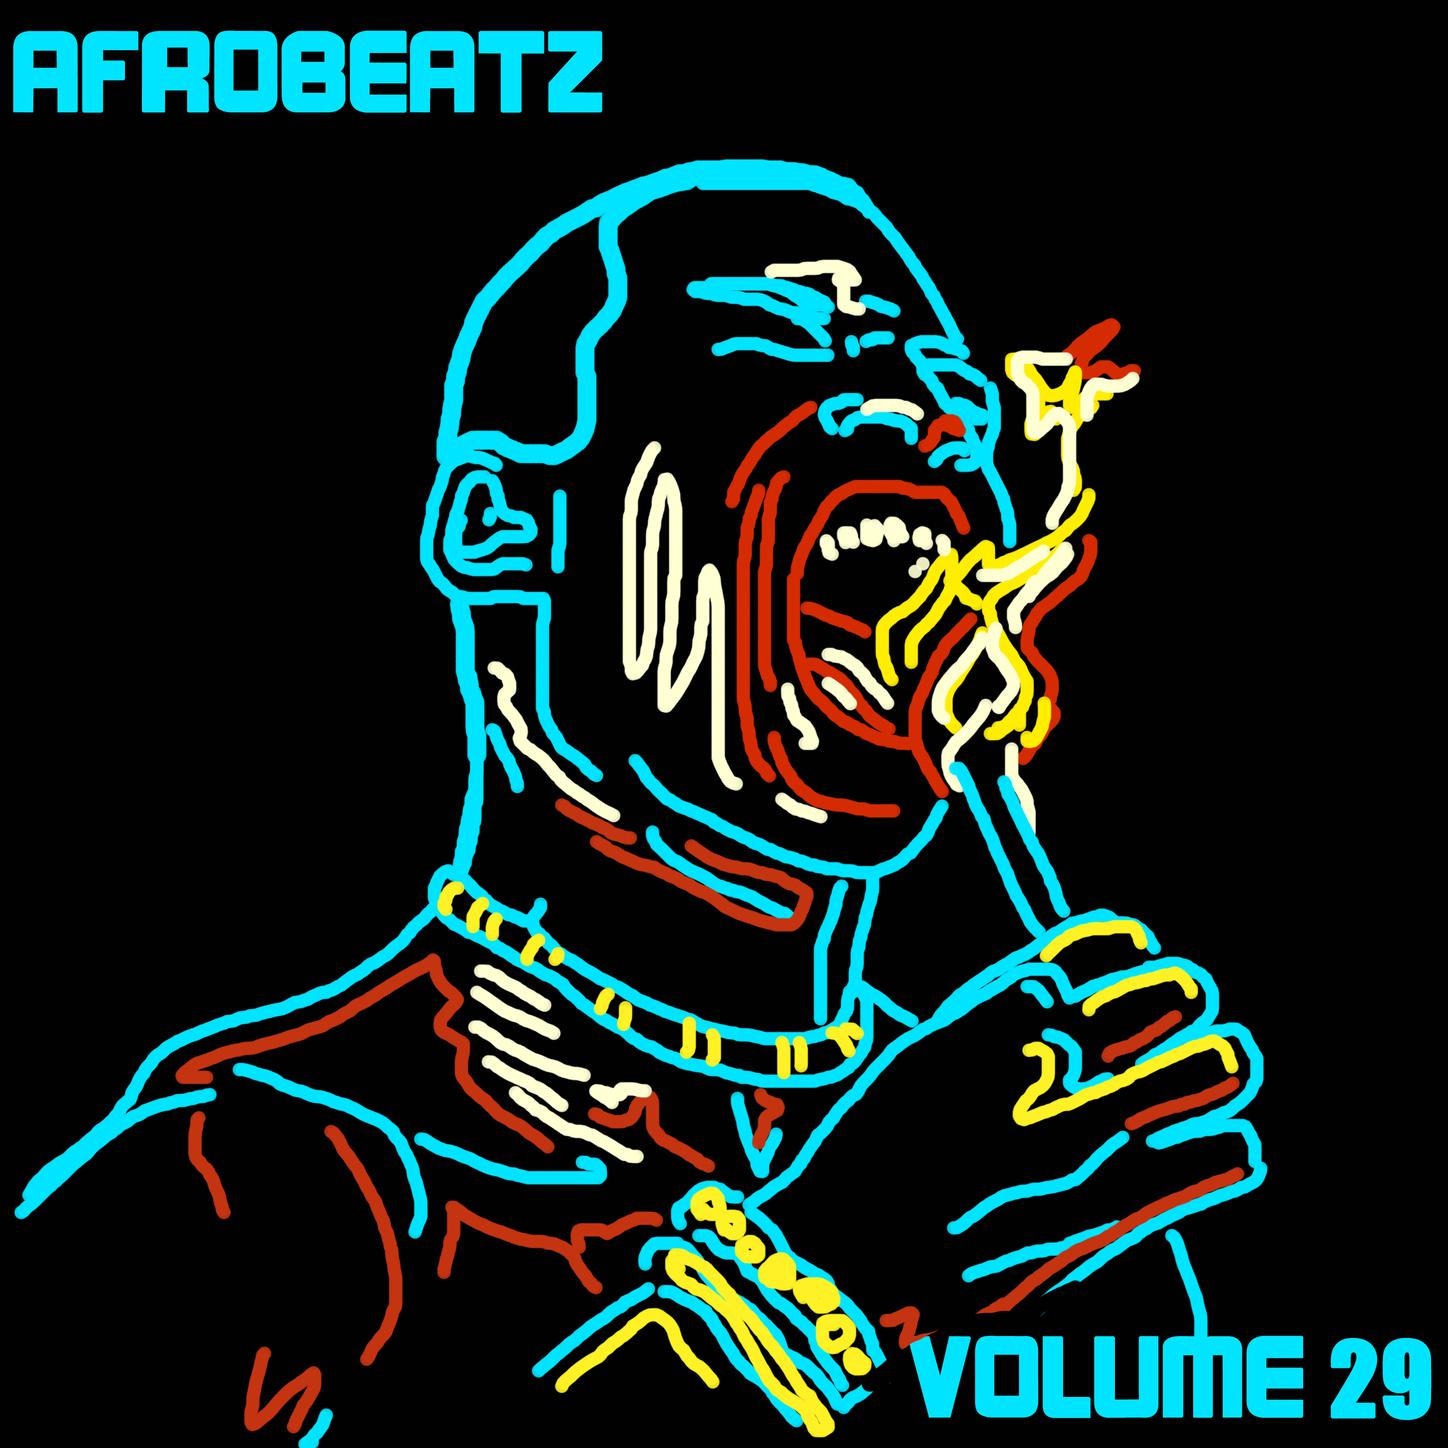 Afrobeatz Vol, 29